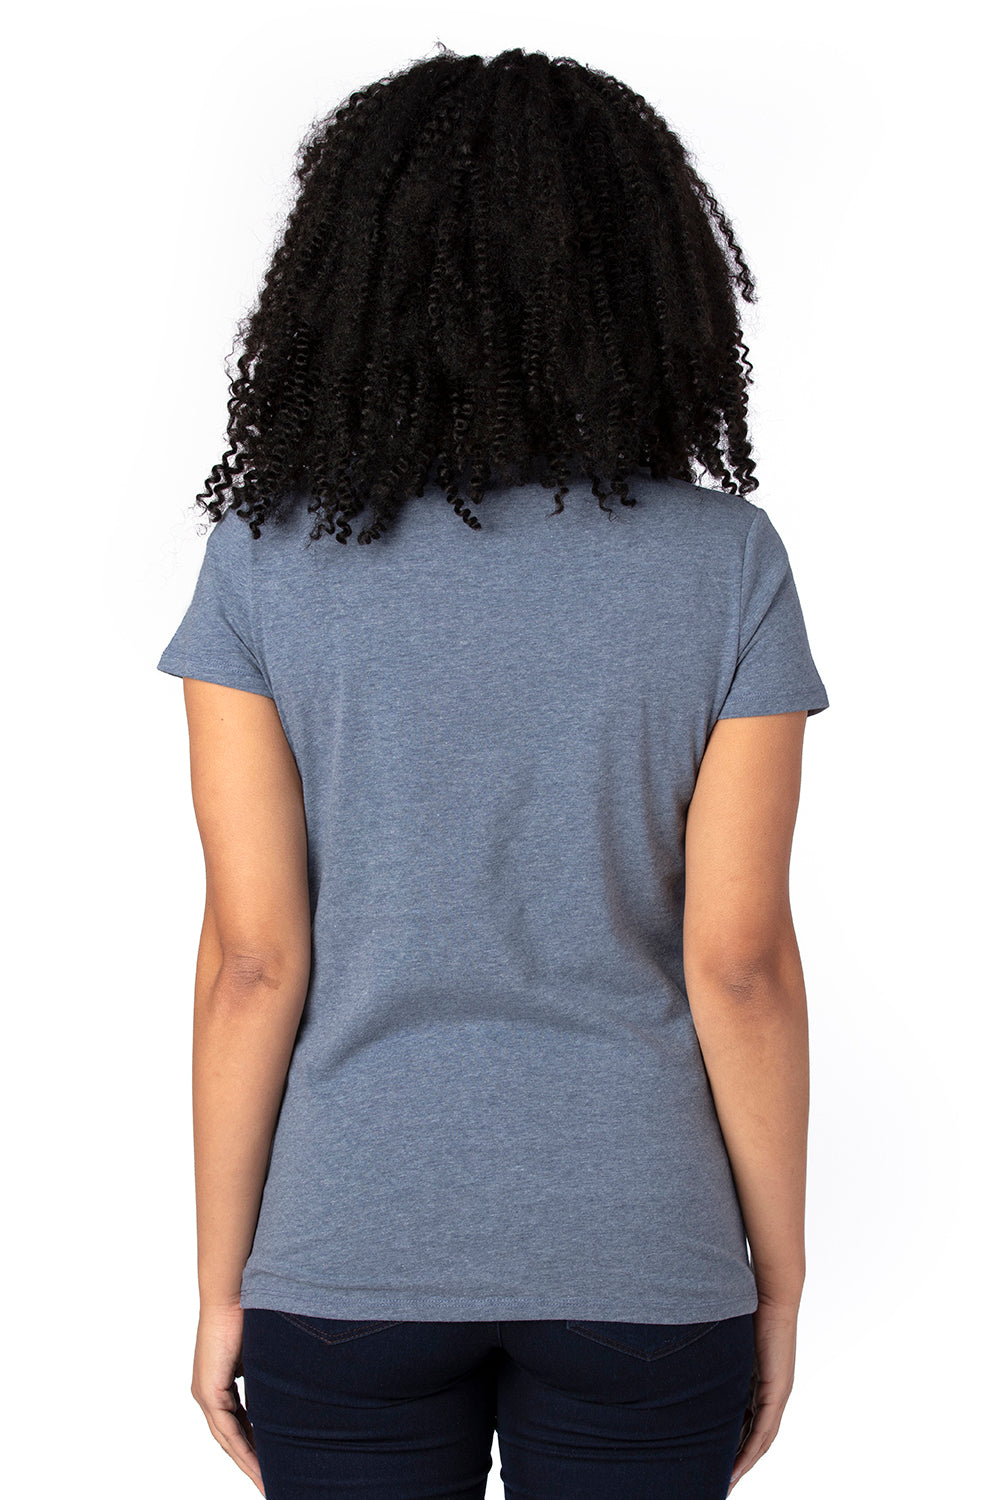 Threadfast Apparel 200RV Womens Ultimate Short Sleeve V-Neck T-Shirt Heather Navy Blue Back